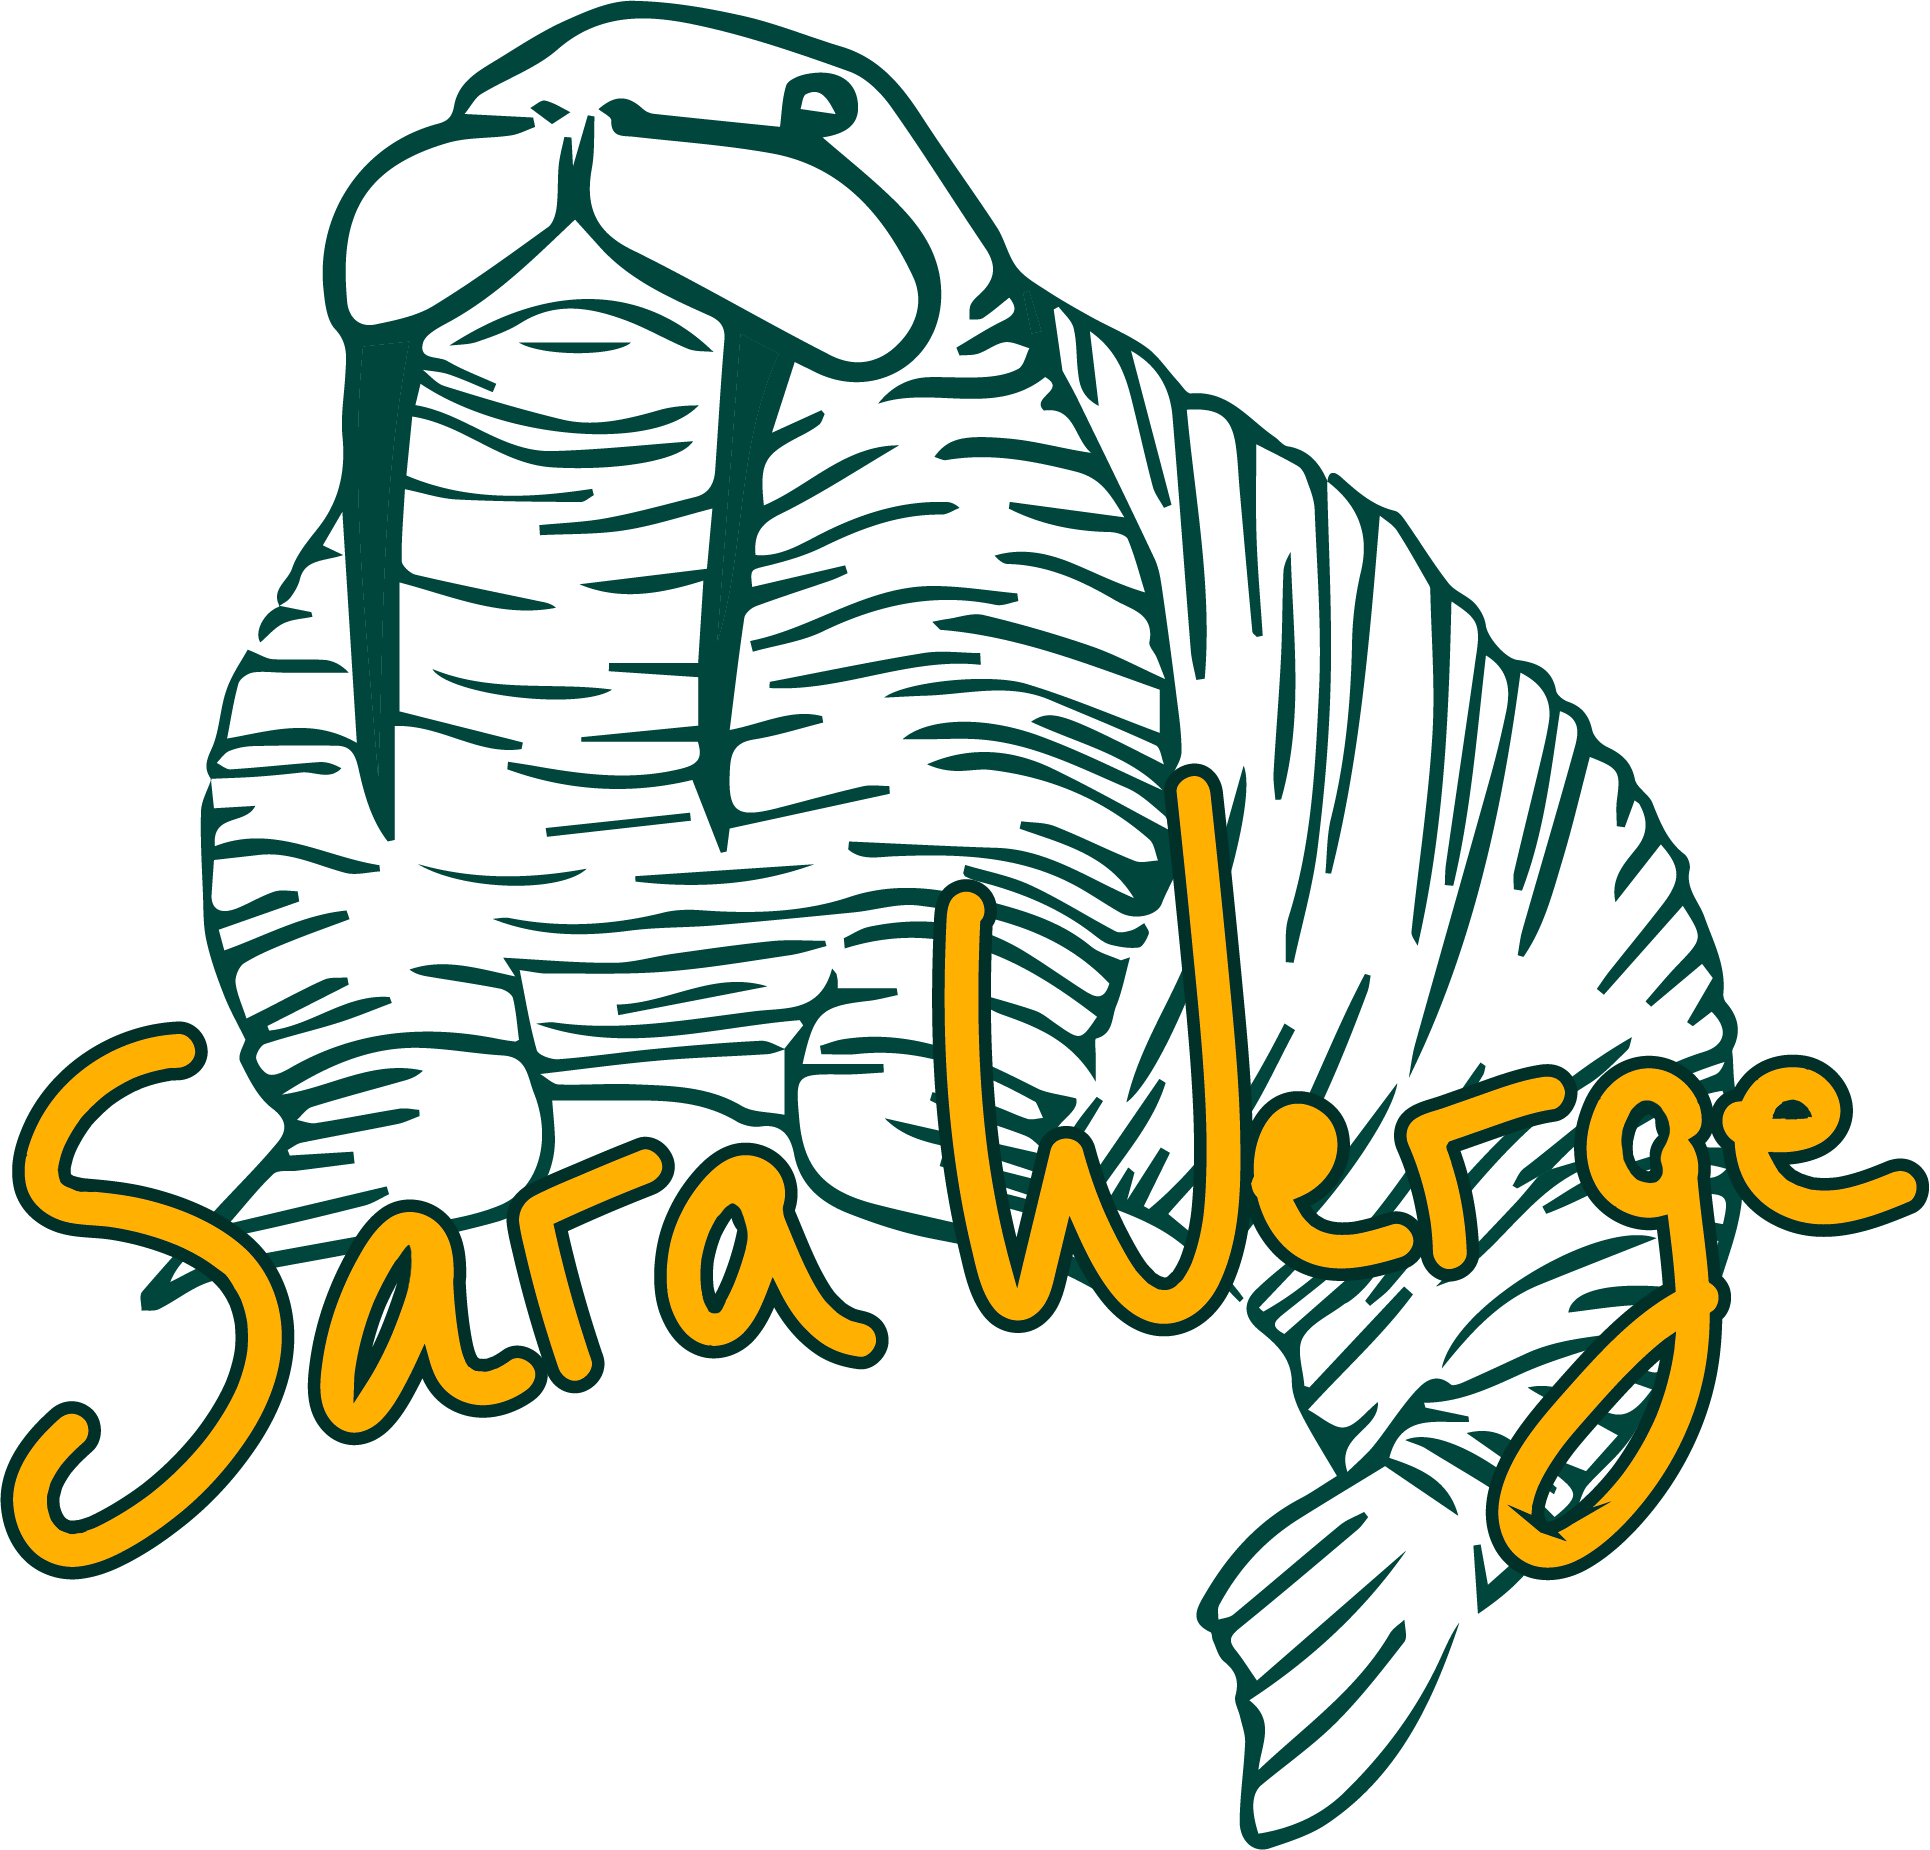 Sara Werge